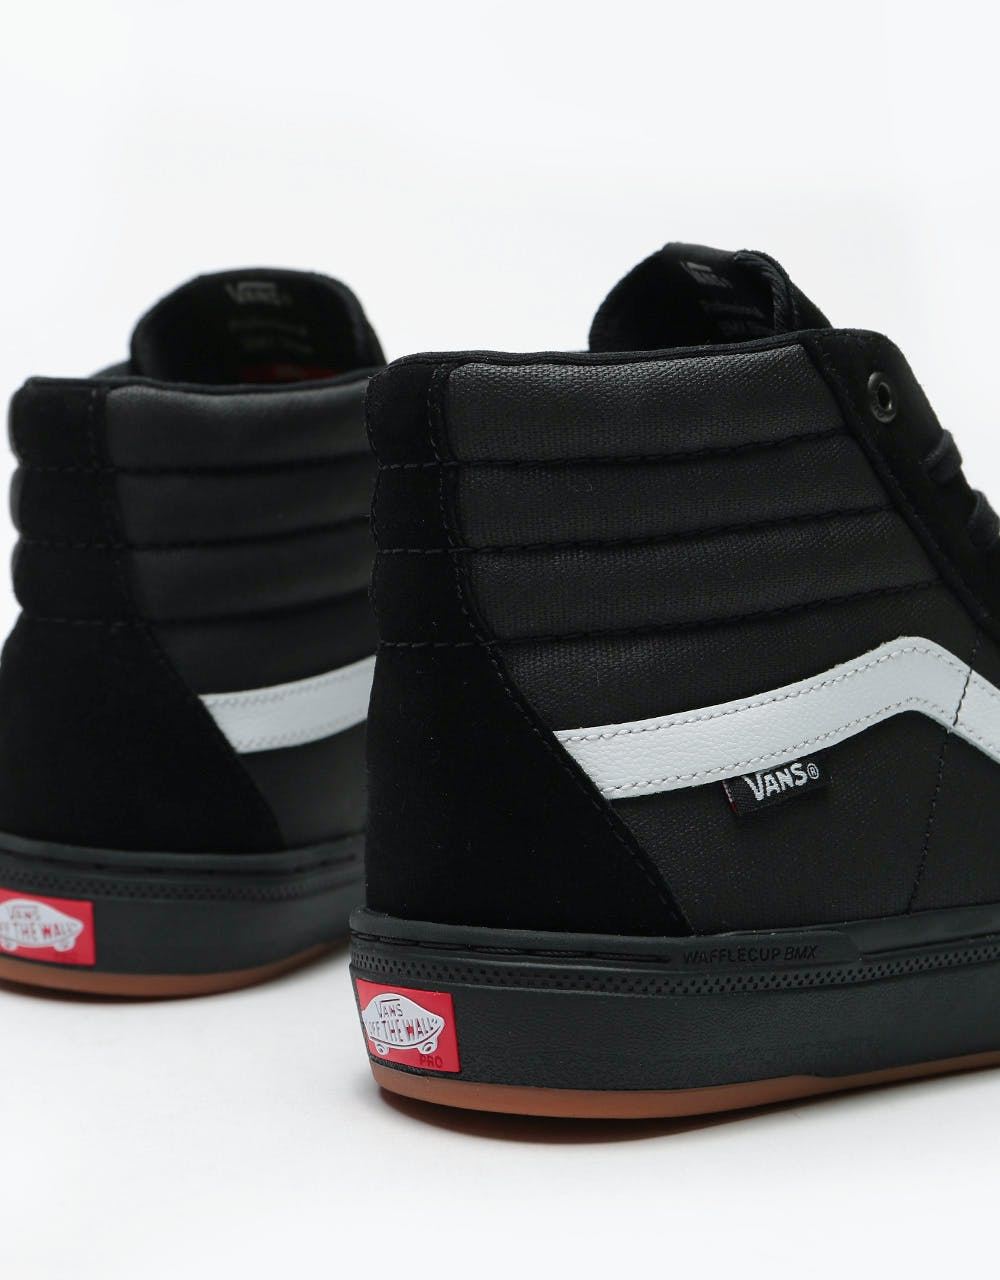 Vans Sk8-Hi BMX Skate Shoes - Black/White